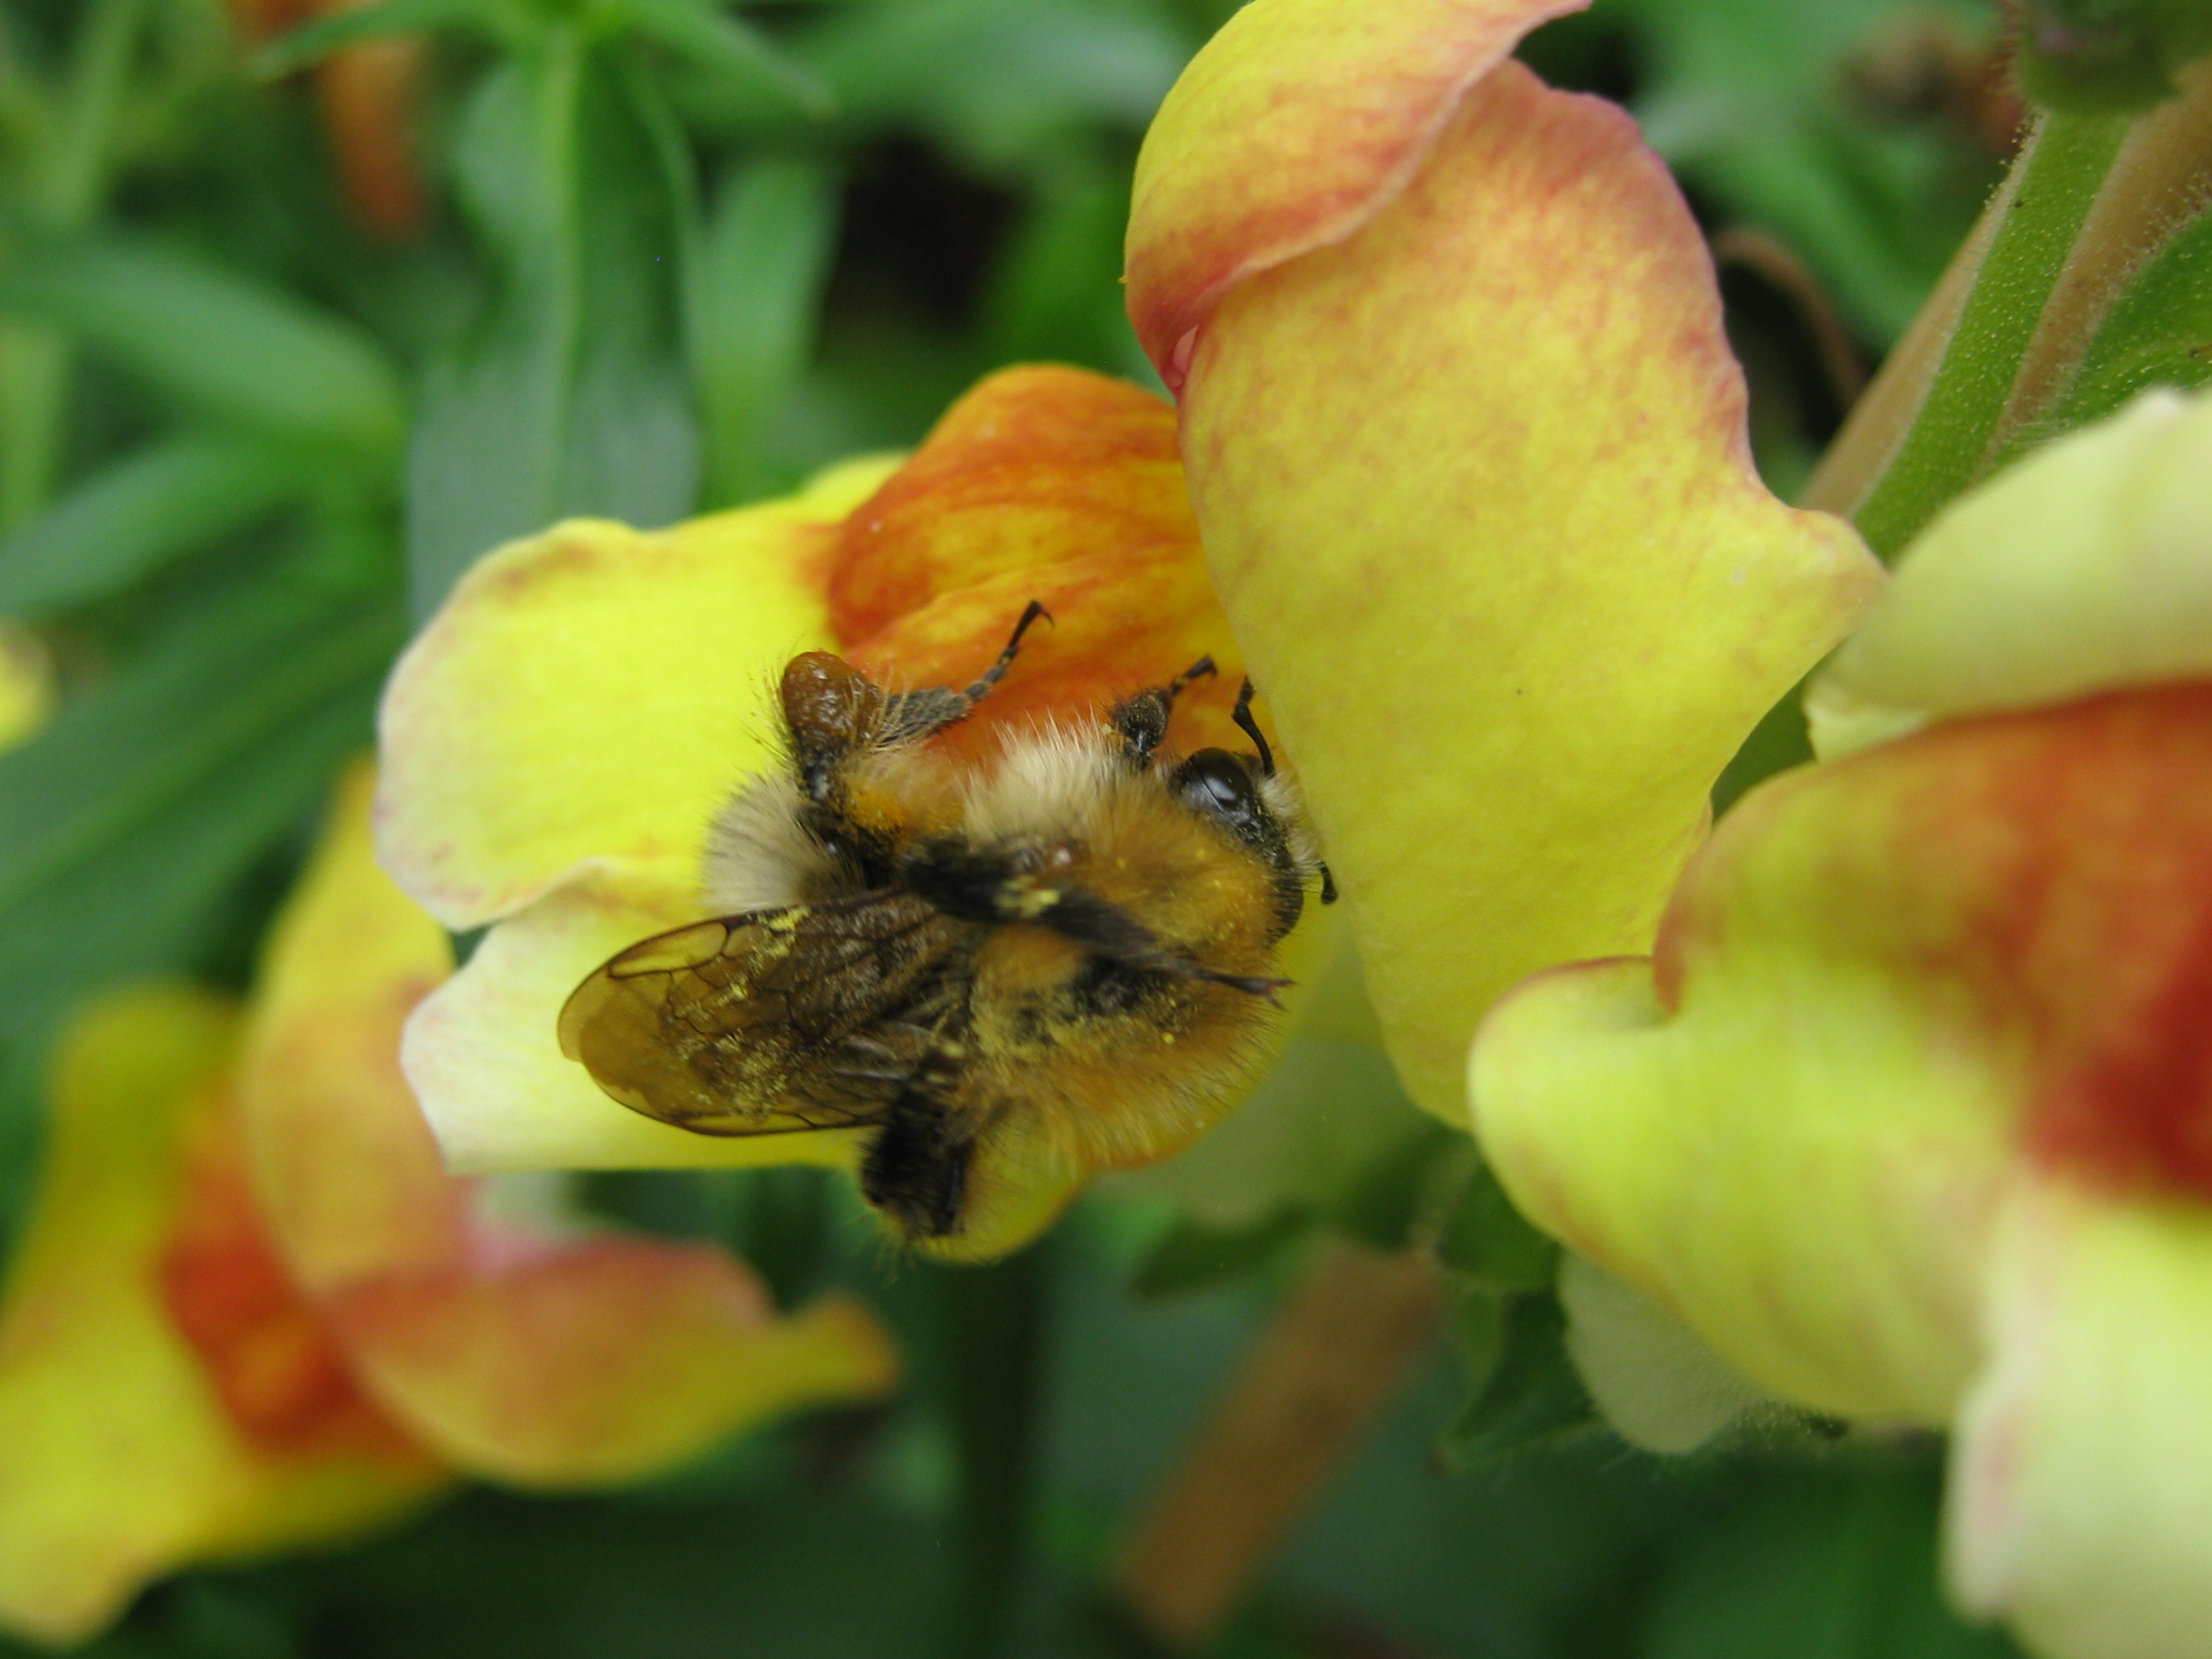 maghreb-algarve-seedbank-banco-semences-antirrhinum-snapdragon-gueule-de-lion-bee-pollination-abeille-coevolution-dimali.jpg